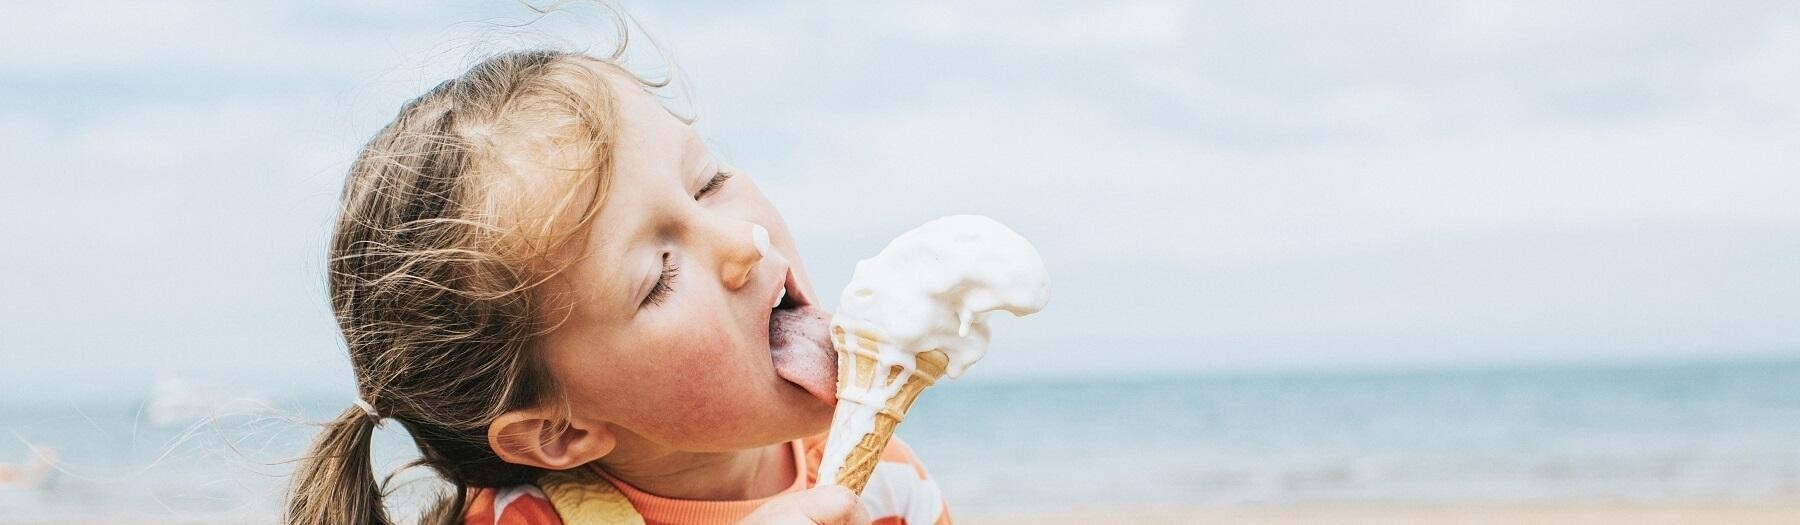 Little girl eating an ice cream at the beach